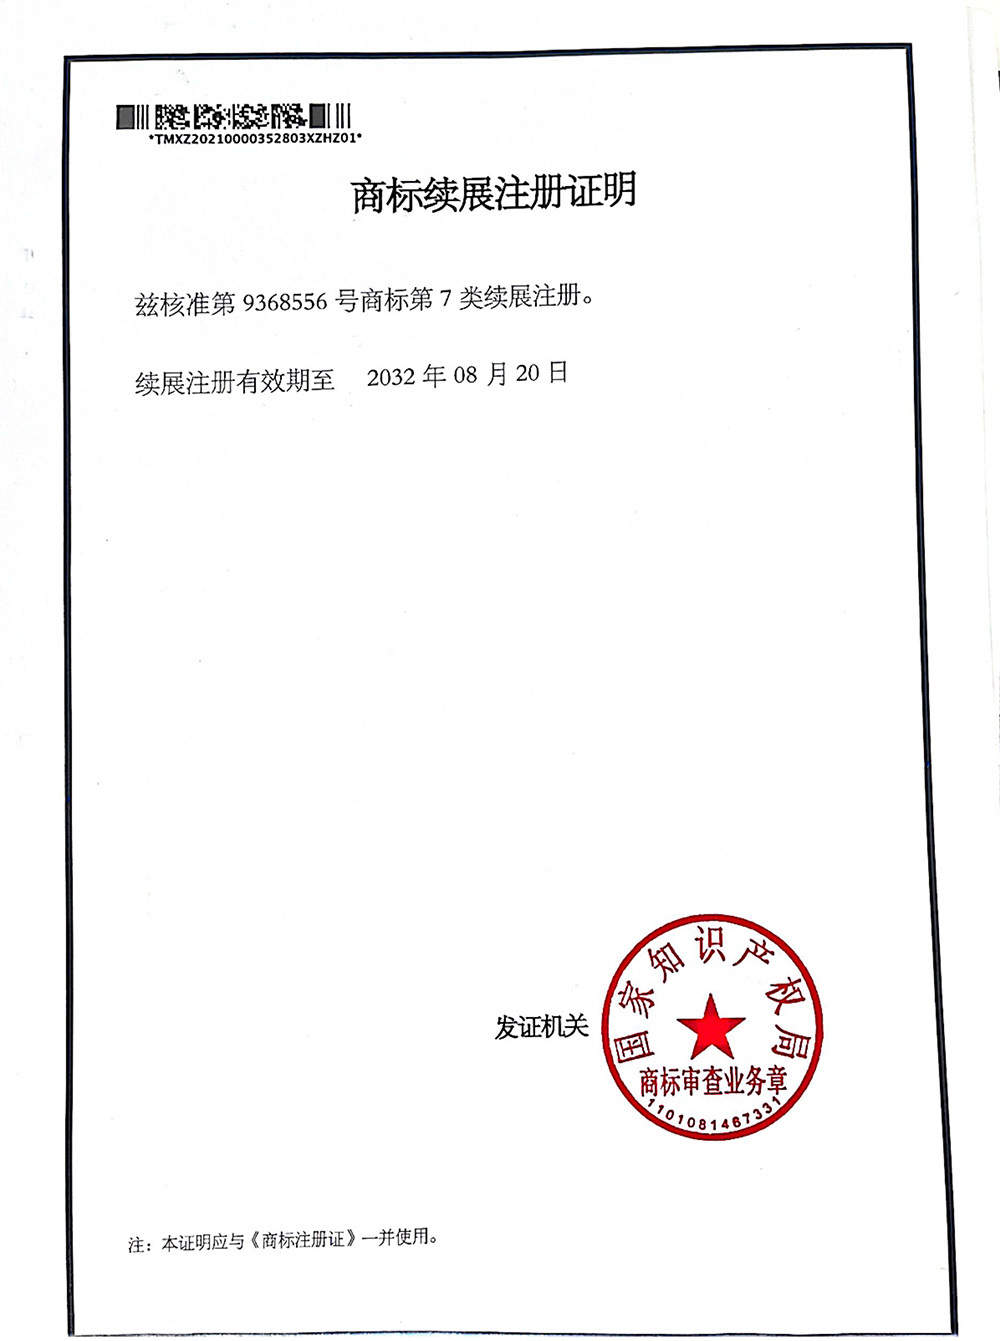 Certificate of Renewal of Trademark Registration